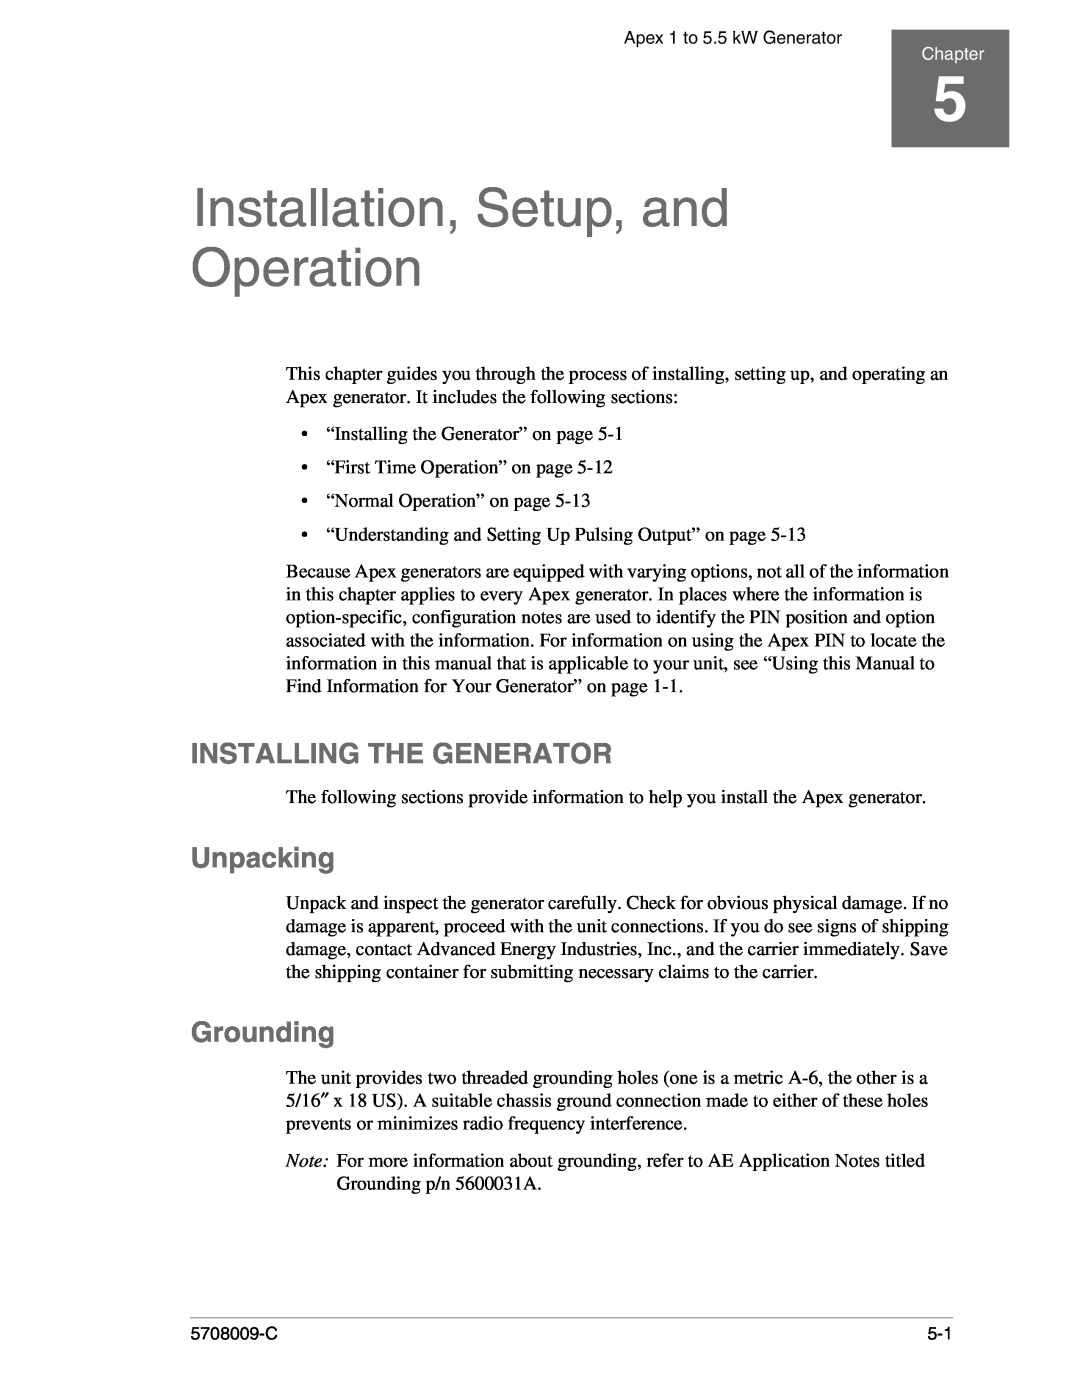 Apex Digital 5708009-C manual Installation, Setup, and Operation, Installing The Generator, Unpacking, Grounding 